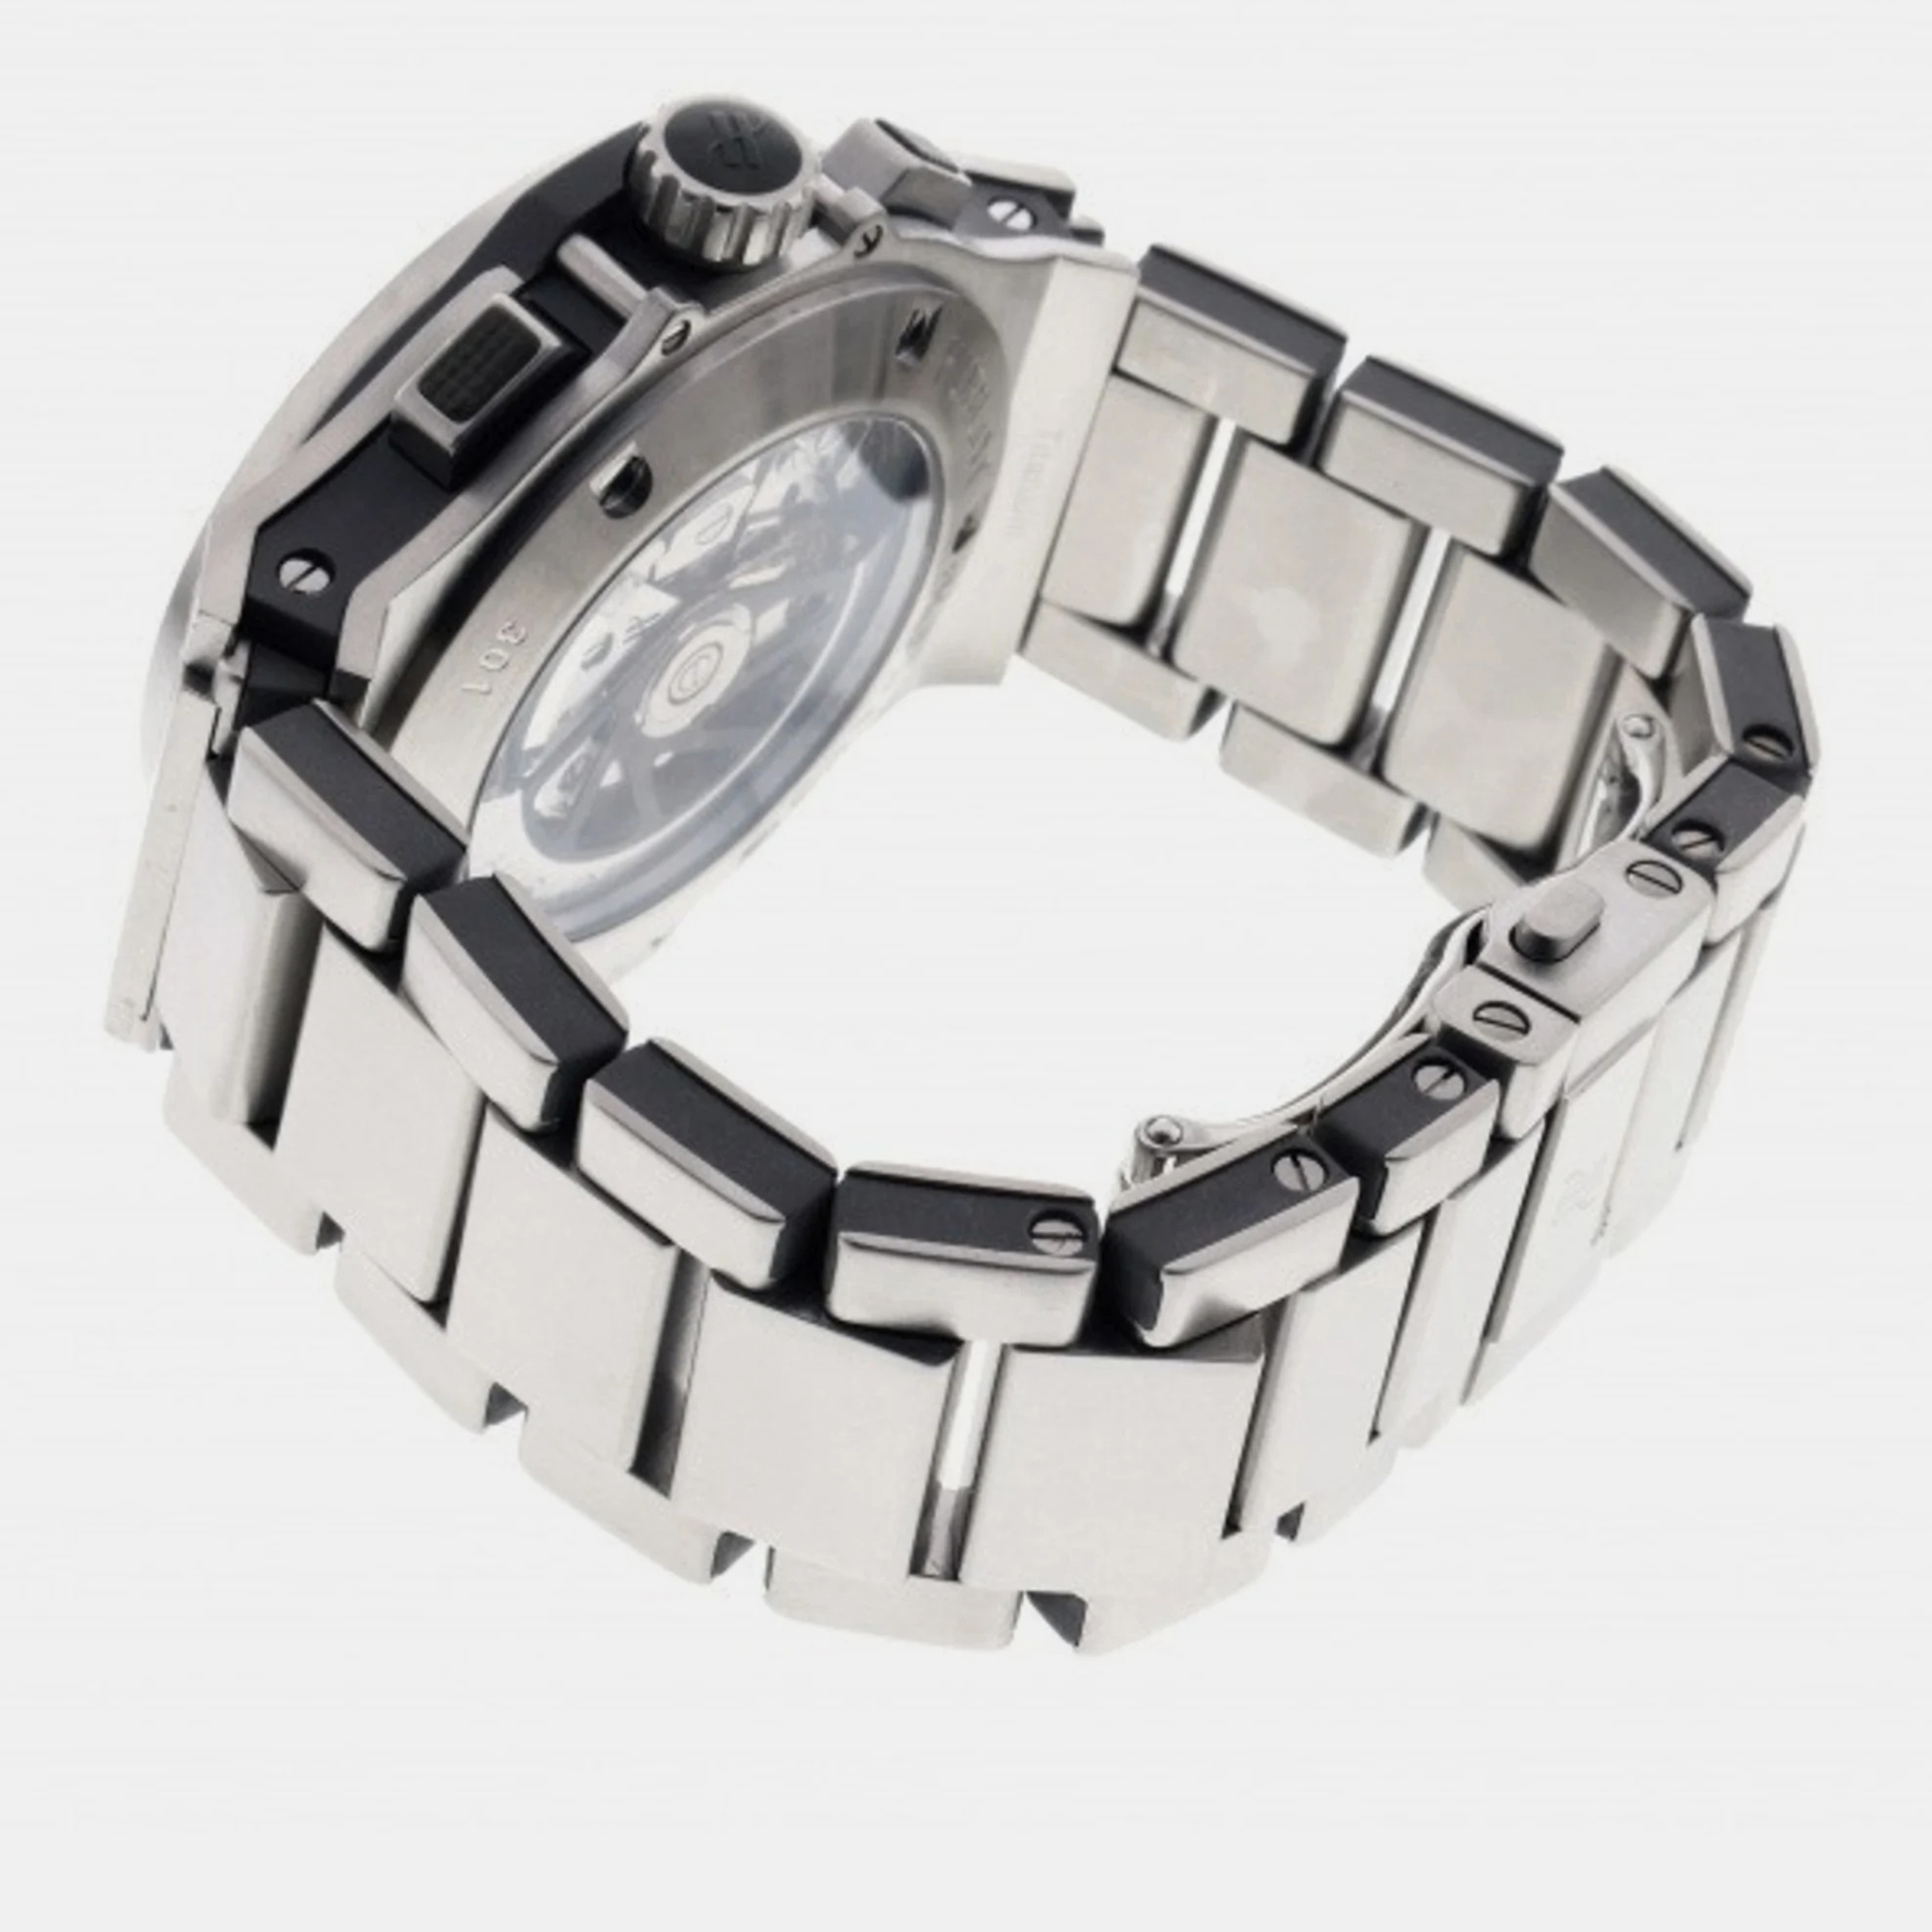 Hublot Grey Diamond Stainless Steel Big Bang 301.ST.5020.ST.1104 Automatic Men's Wristwatch 44 Mm